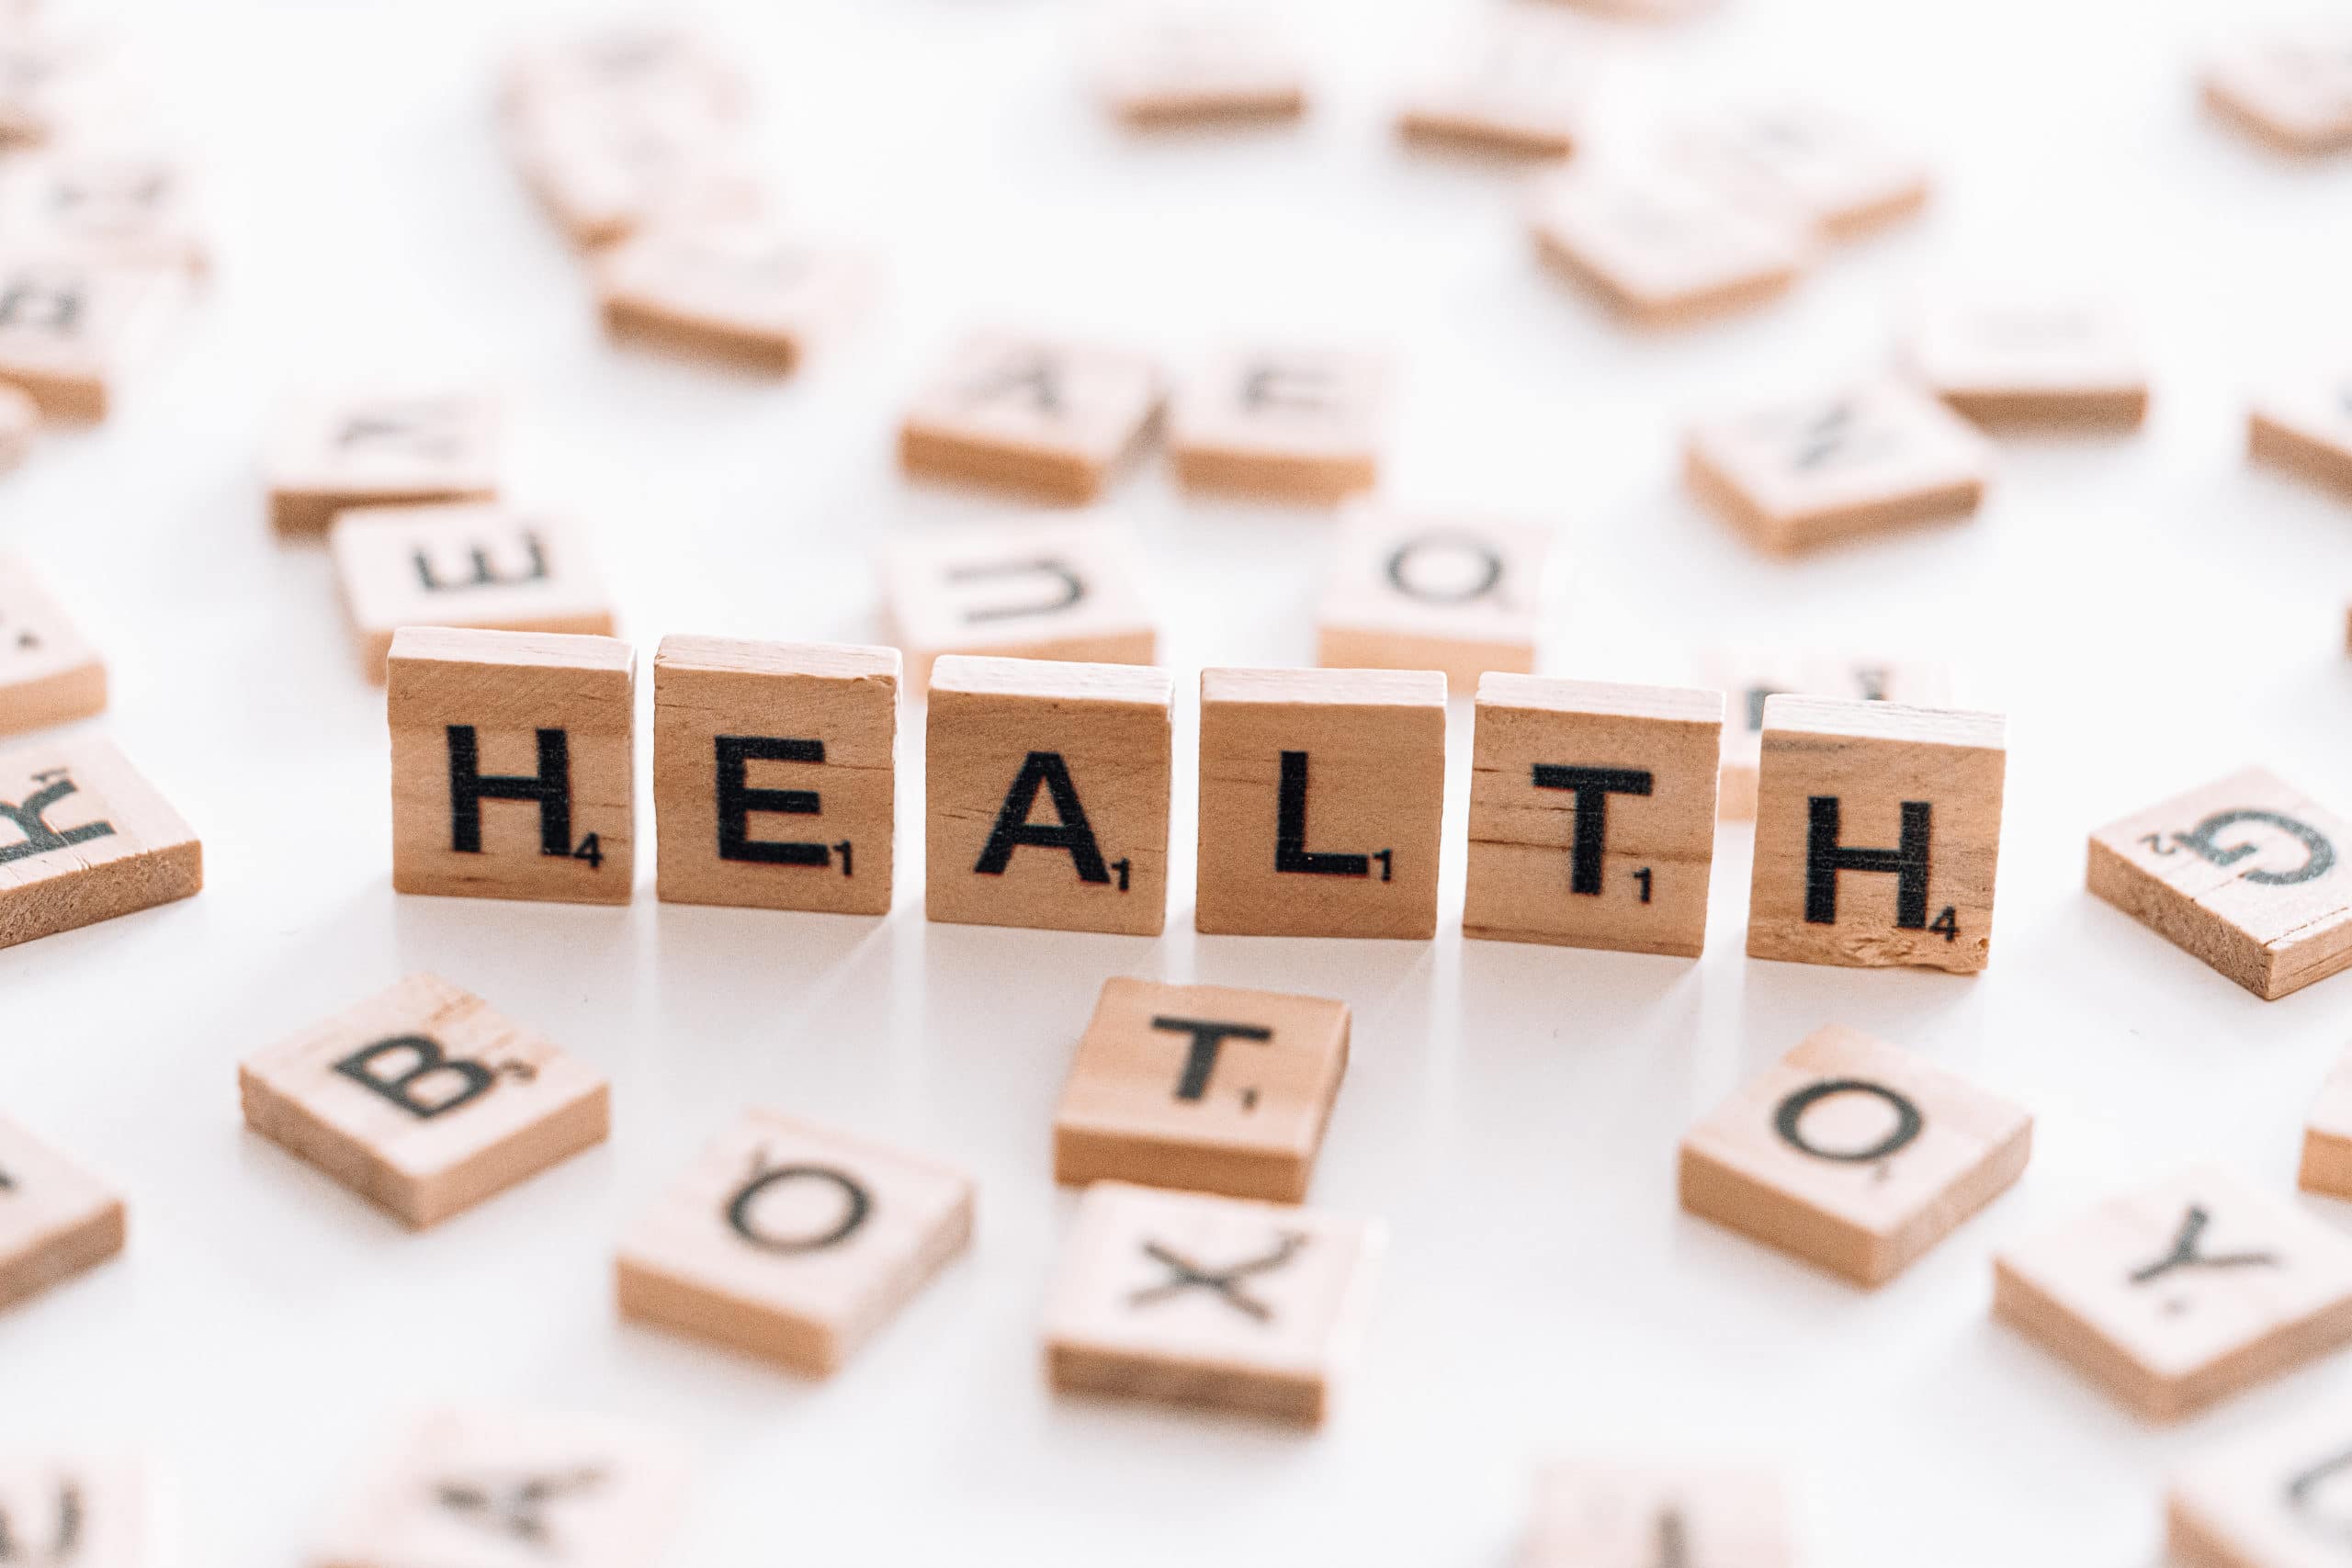 HEALTH spelled in Scrabble letters